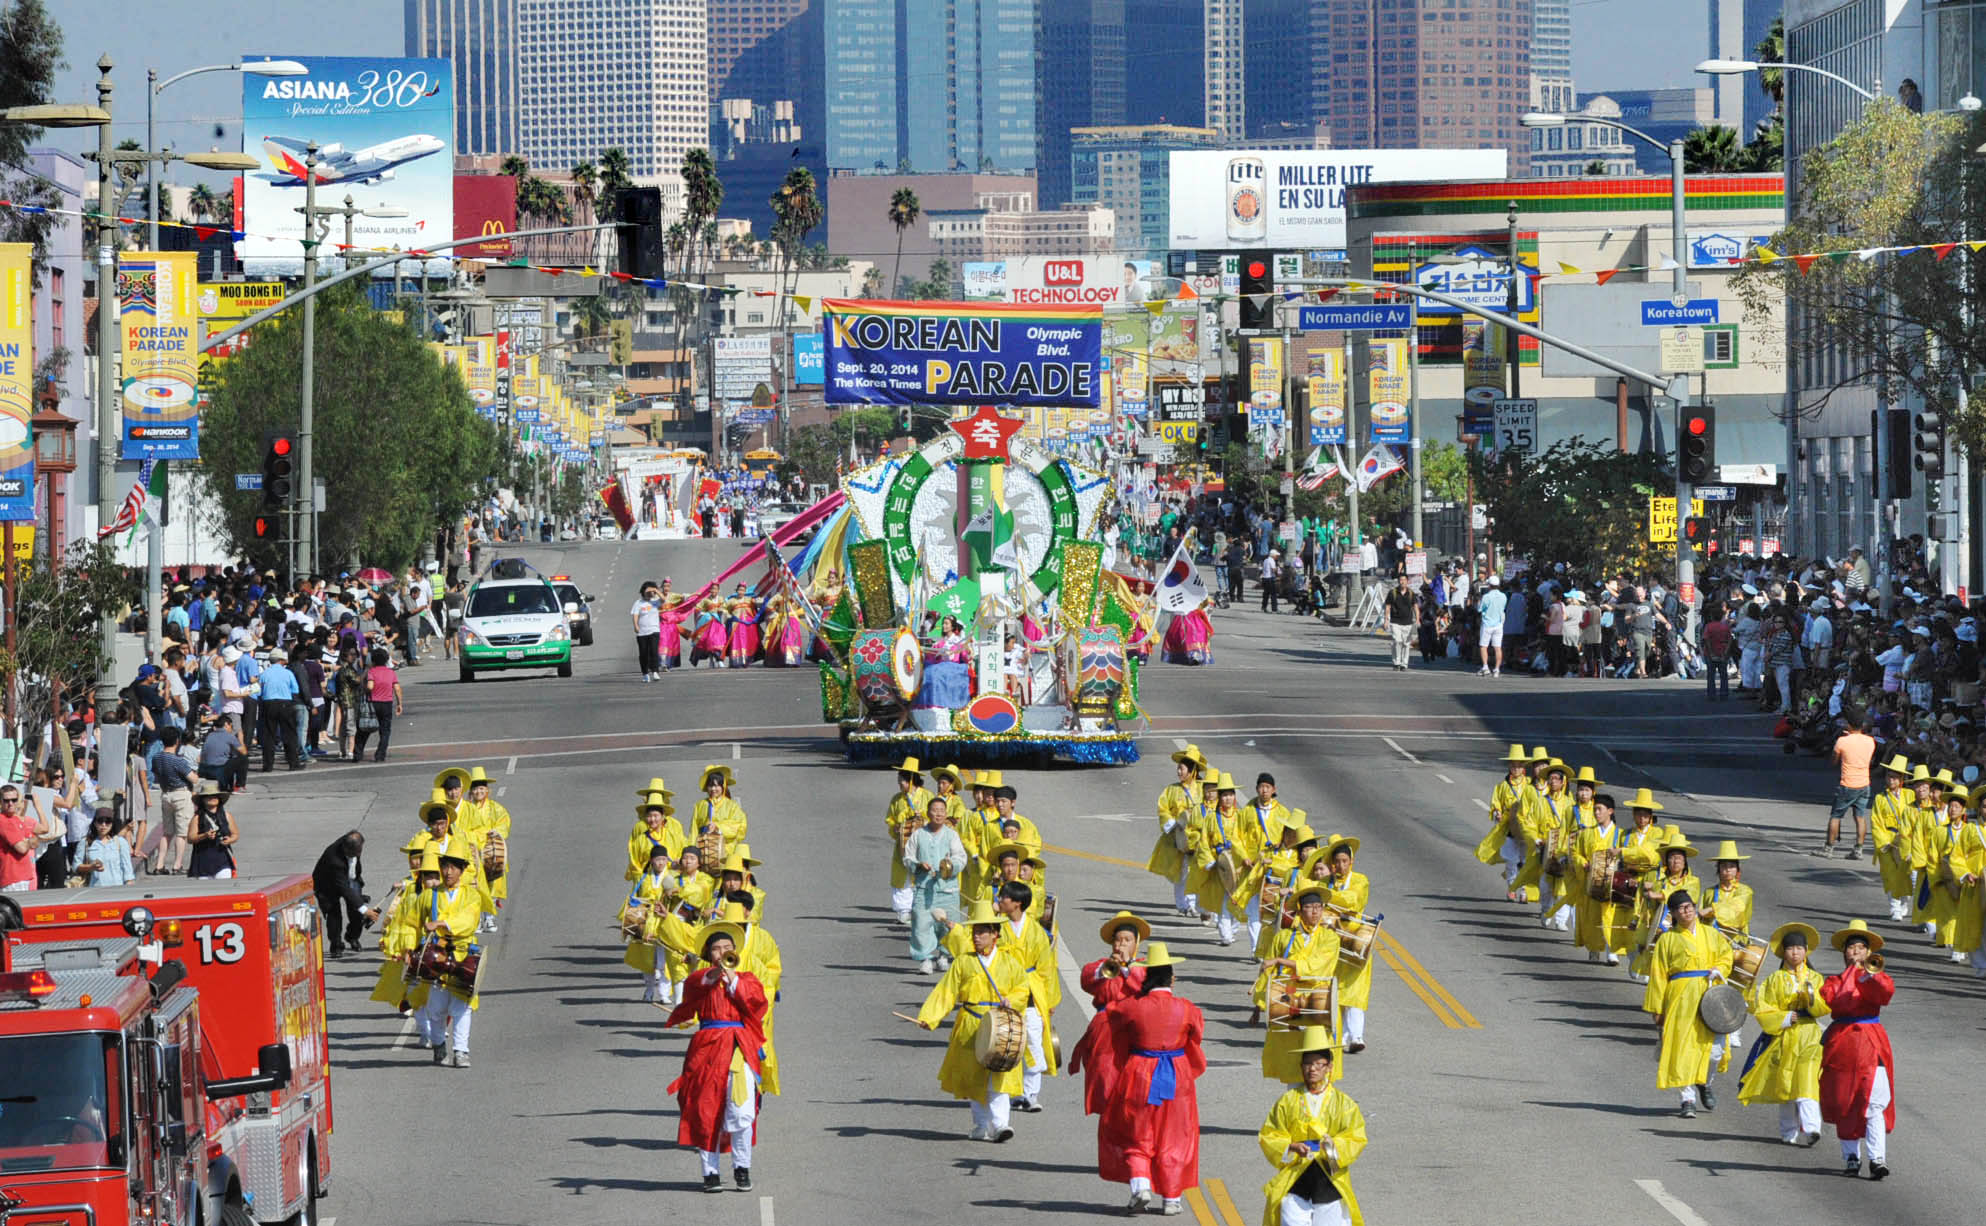 L.A. Korean Parade brings community together The Korea Times